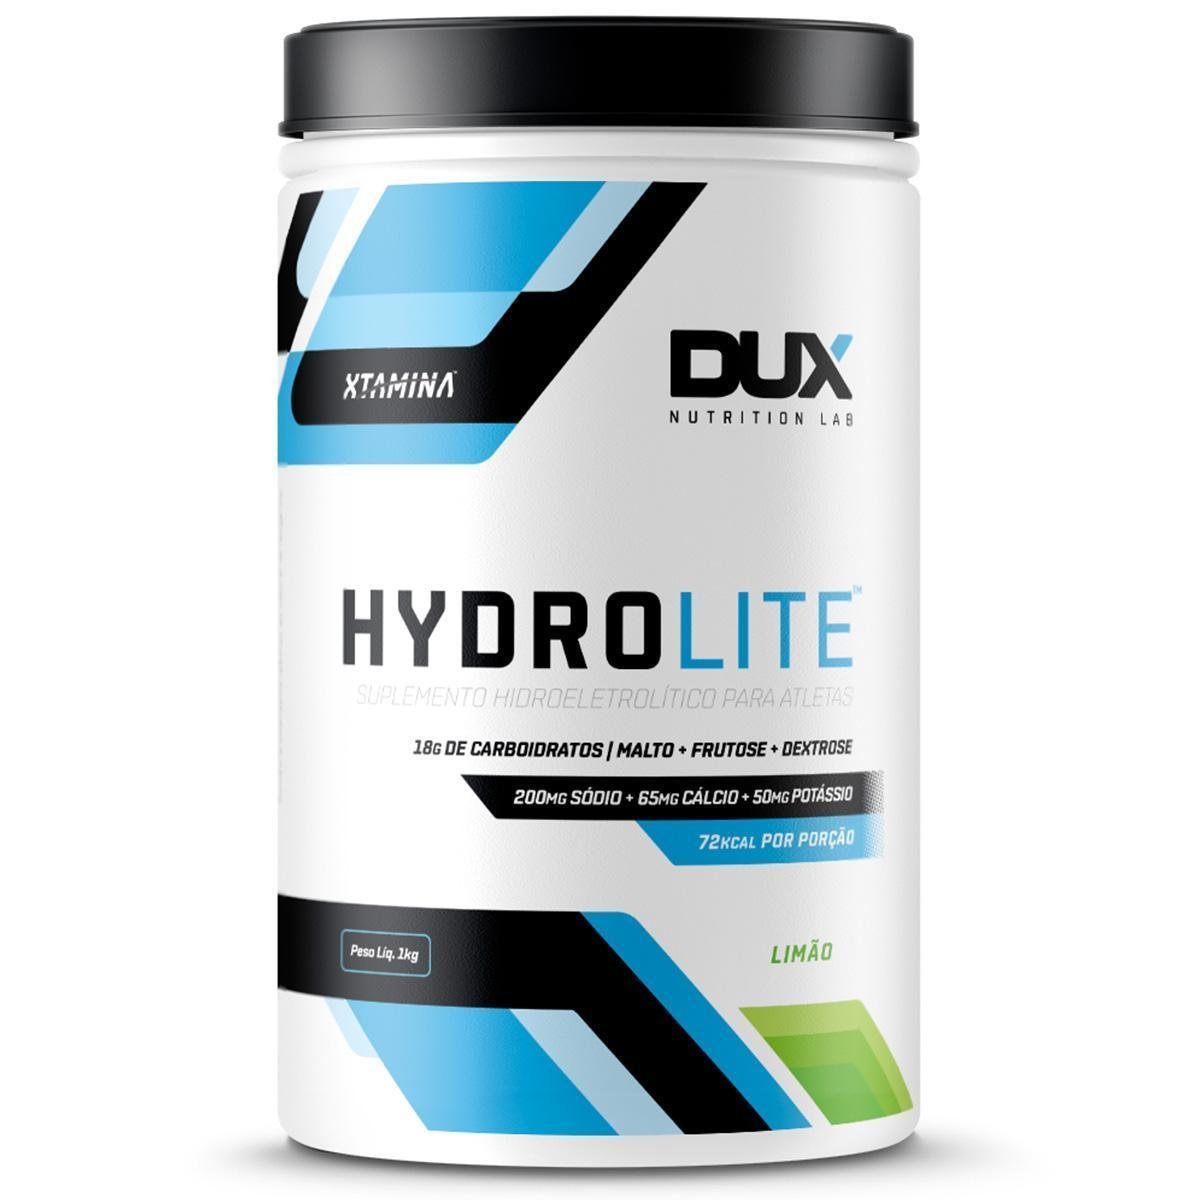 Hydrolite - DUX (1kg)